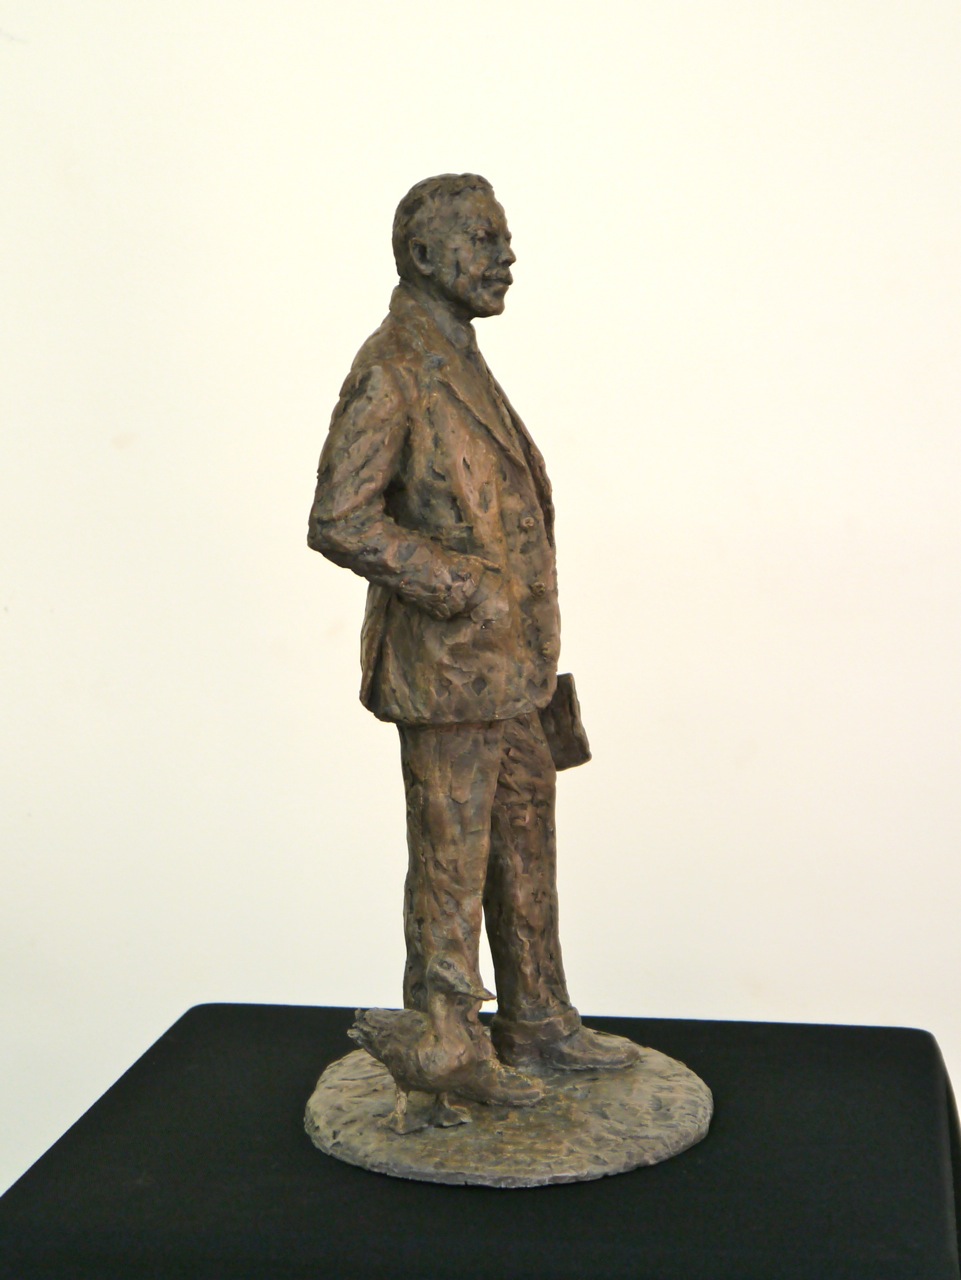 The bronze Sir Nigel Gresley and Mallard maquette